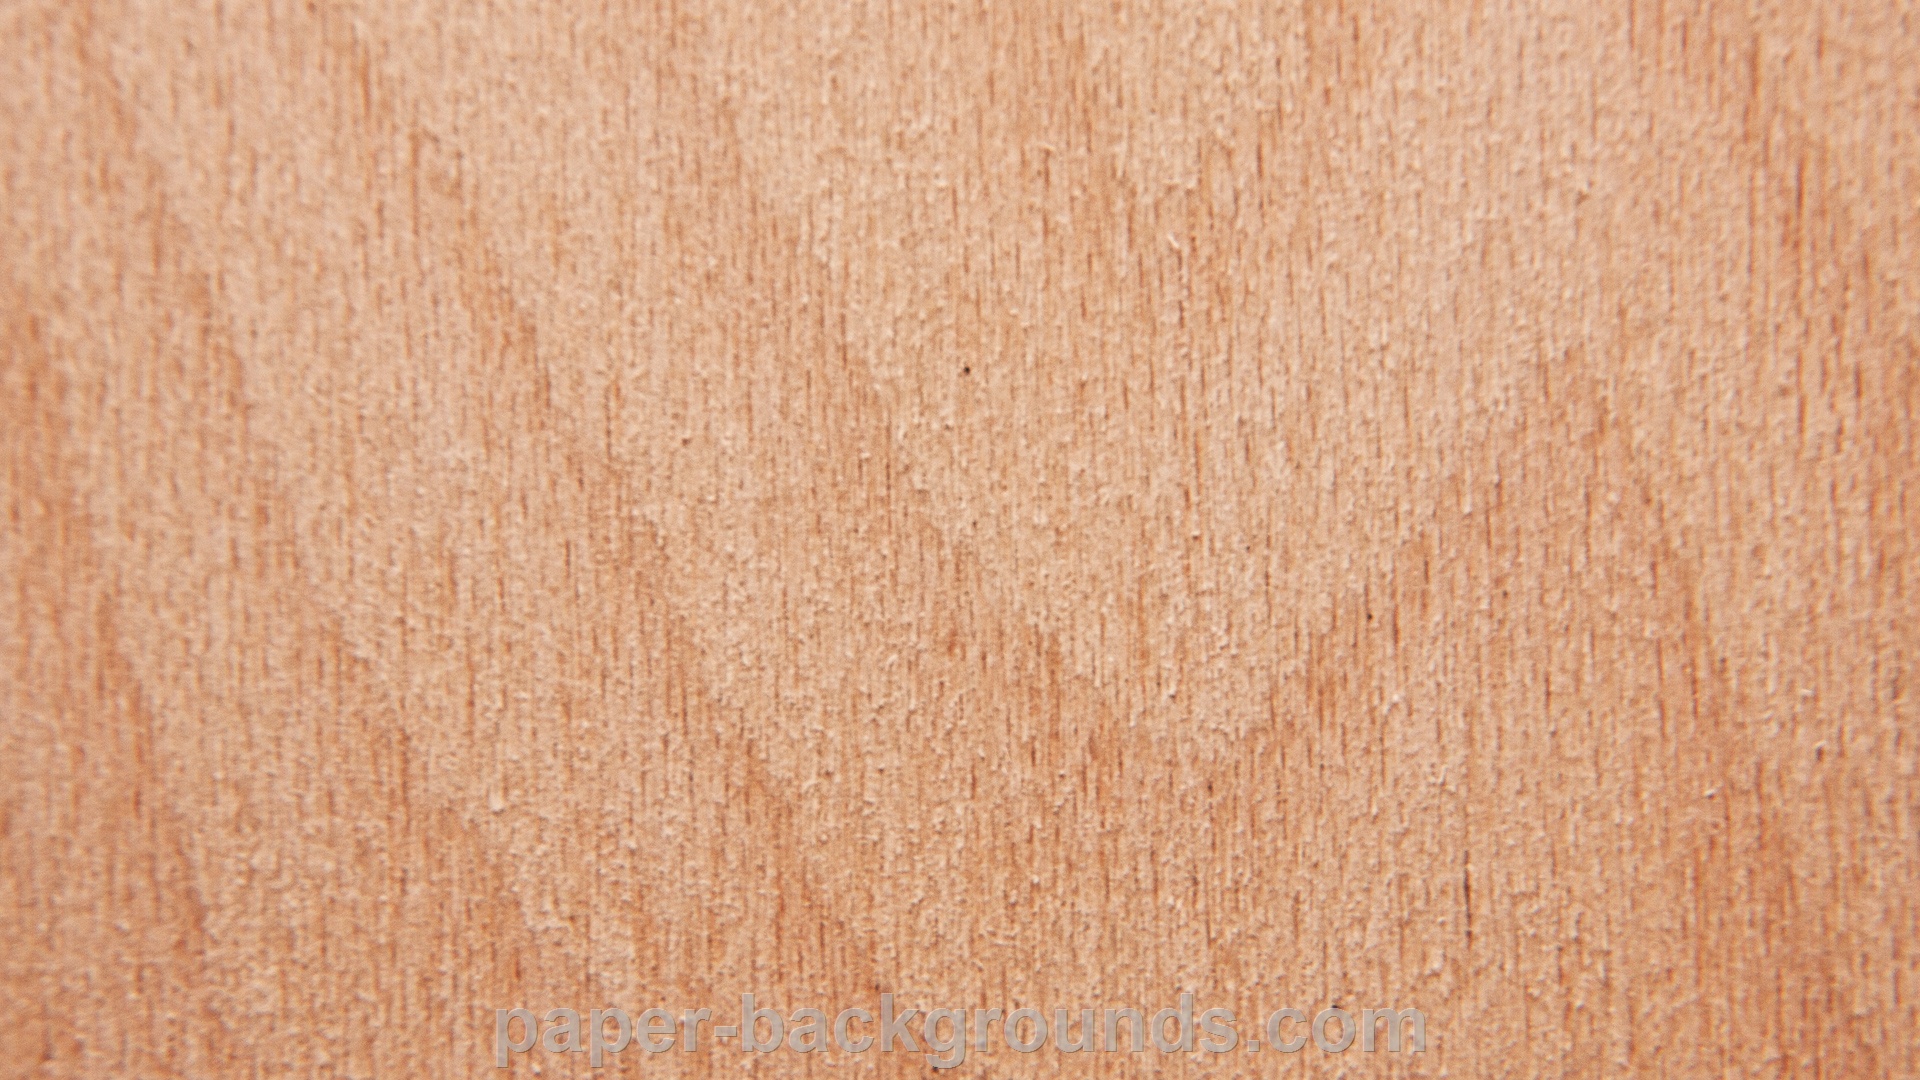  comtextureimages201207light brown wood texture background hdjpg